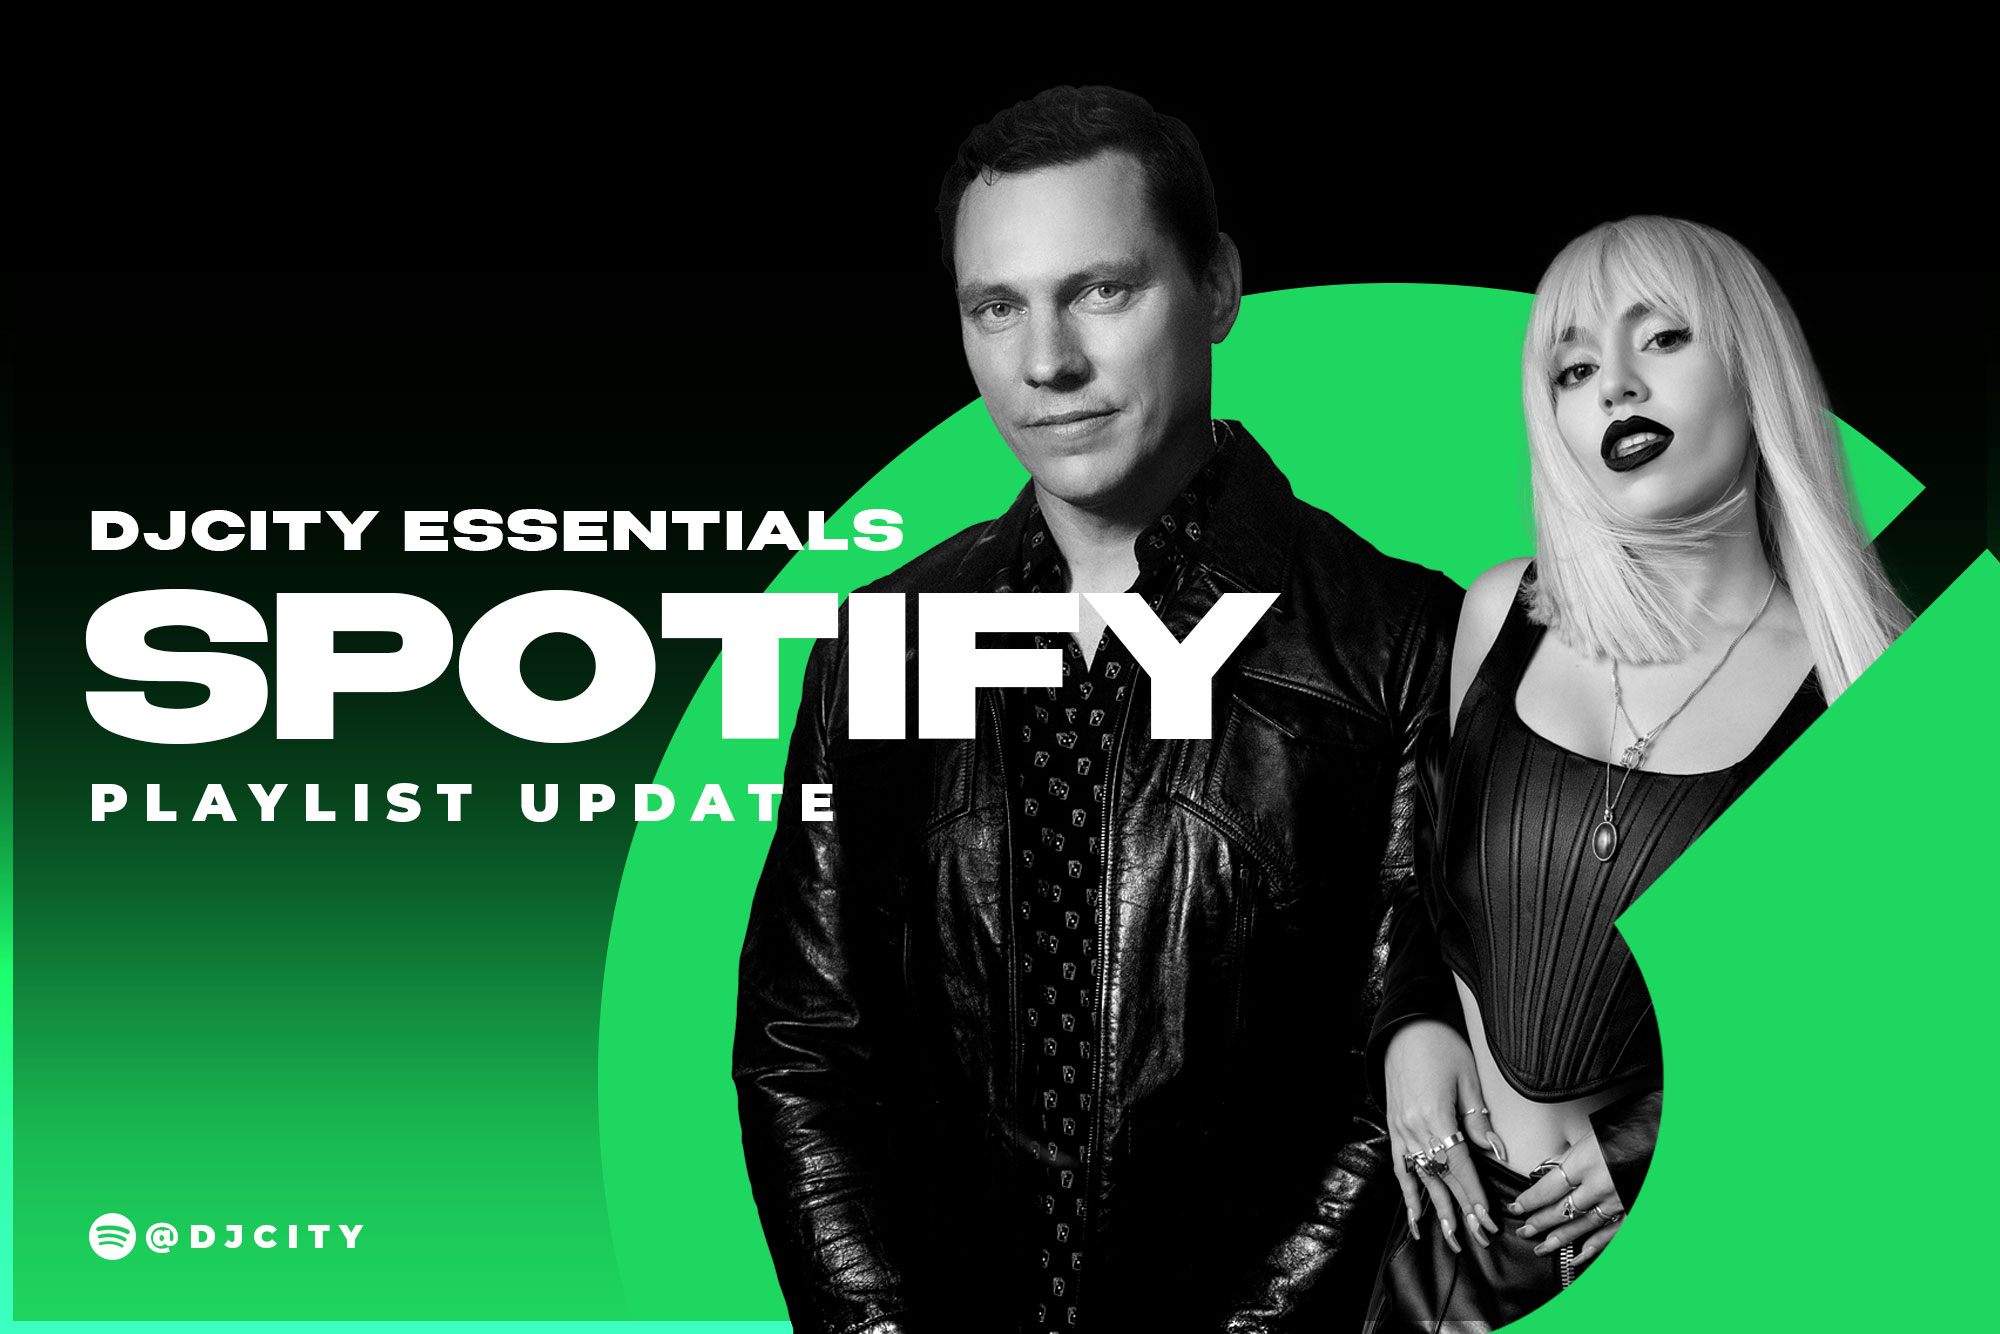 DJcity’s Spotify Playlist Update: Nov. 9